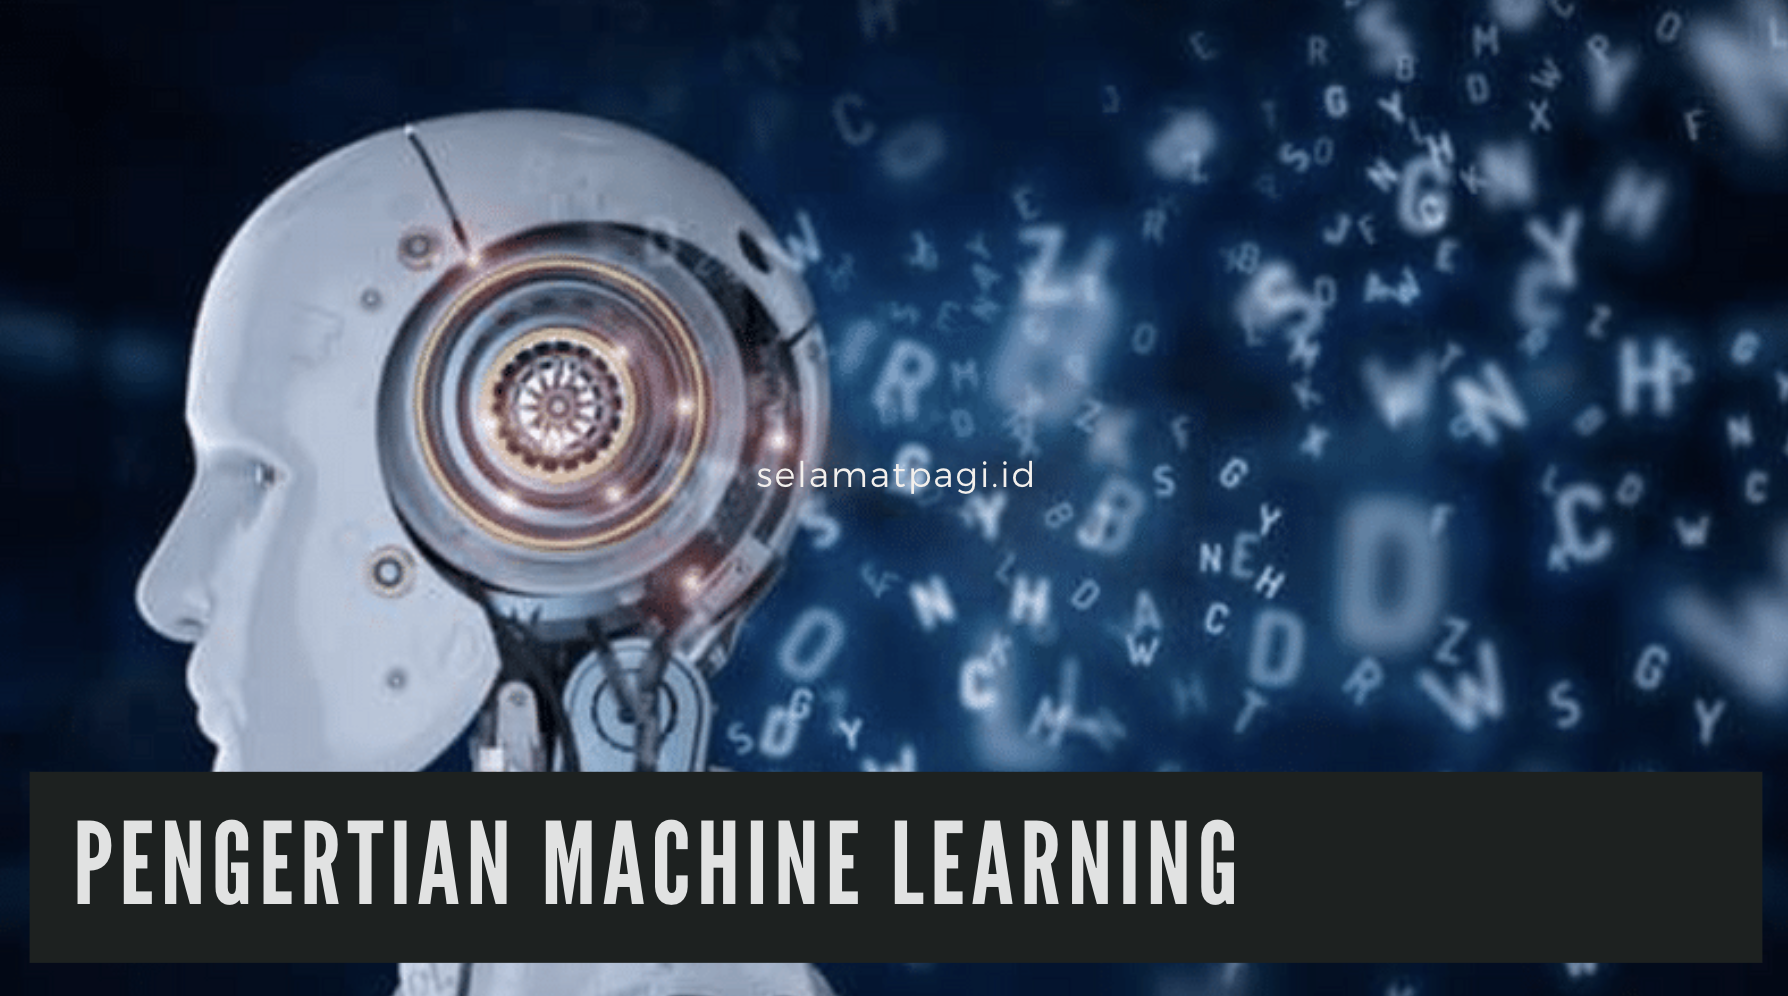 Pengertian Machine Learning